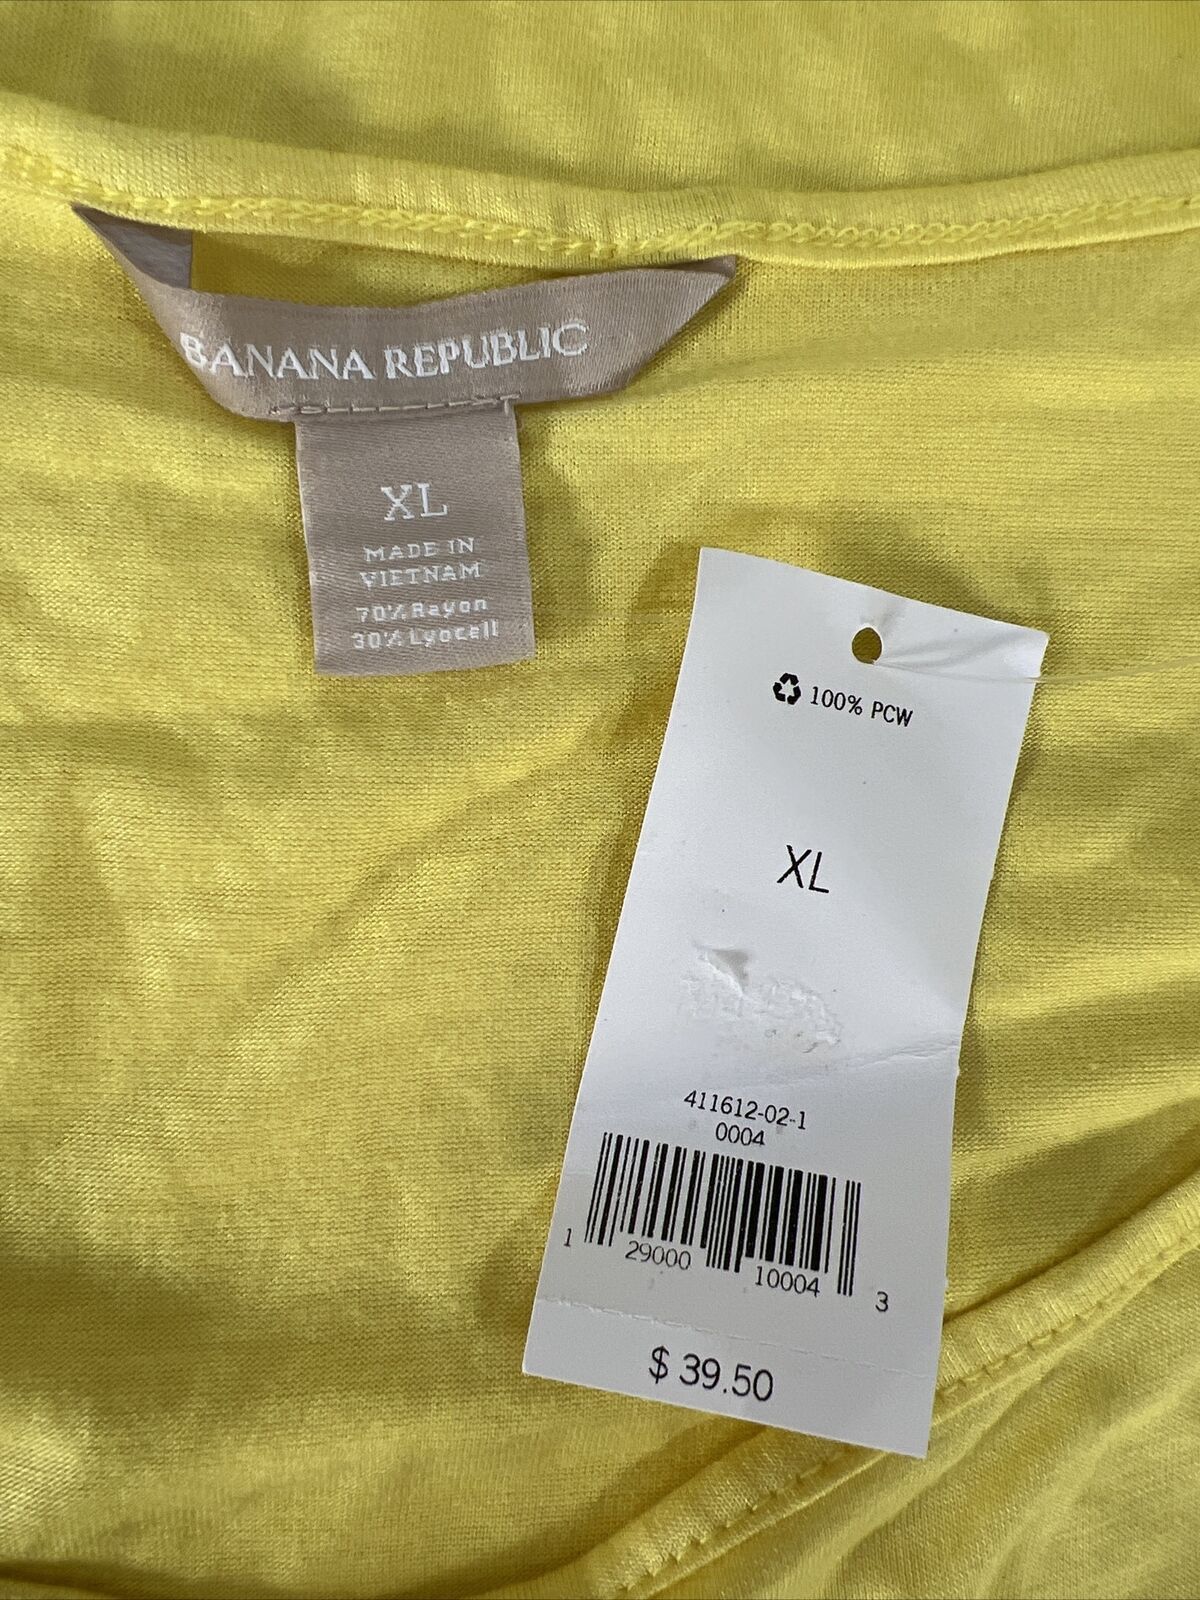 NEW Banana Republic Women's Yellow Flare Bottom T-Shirt - XL